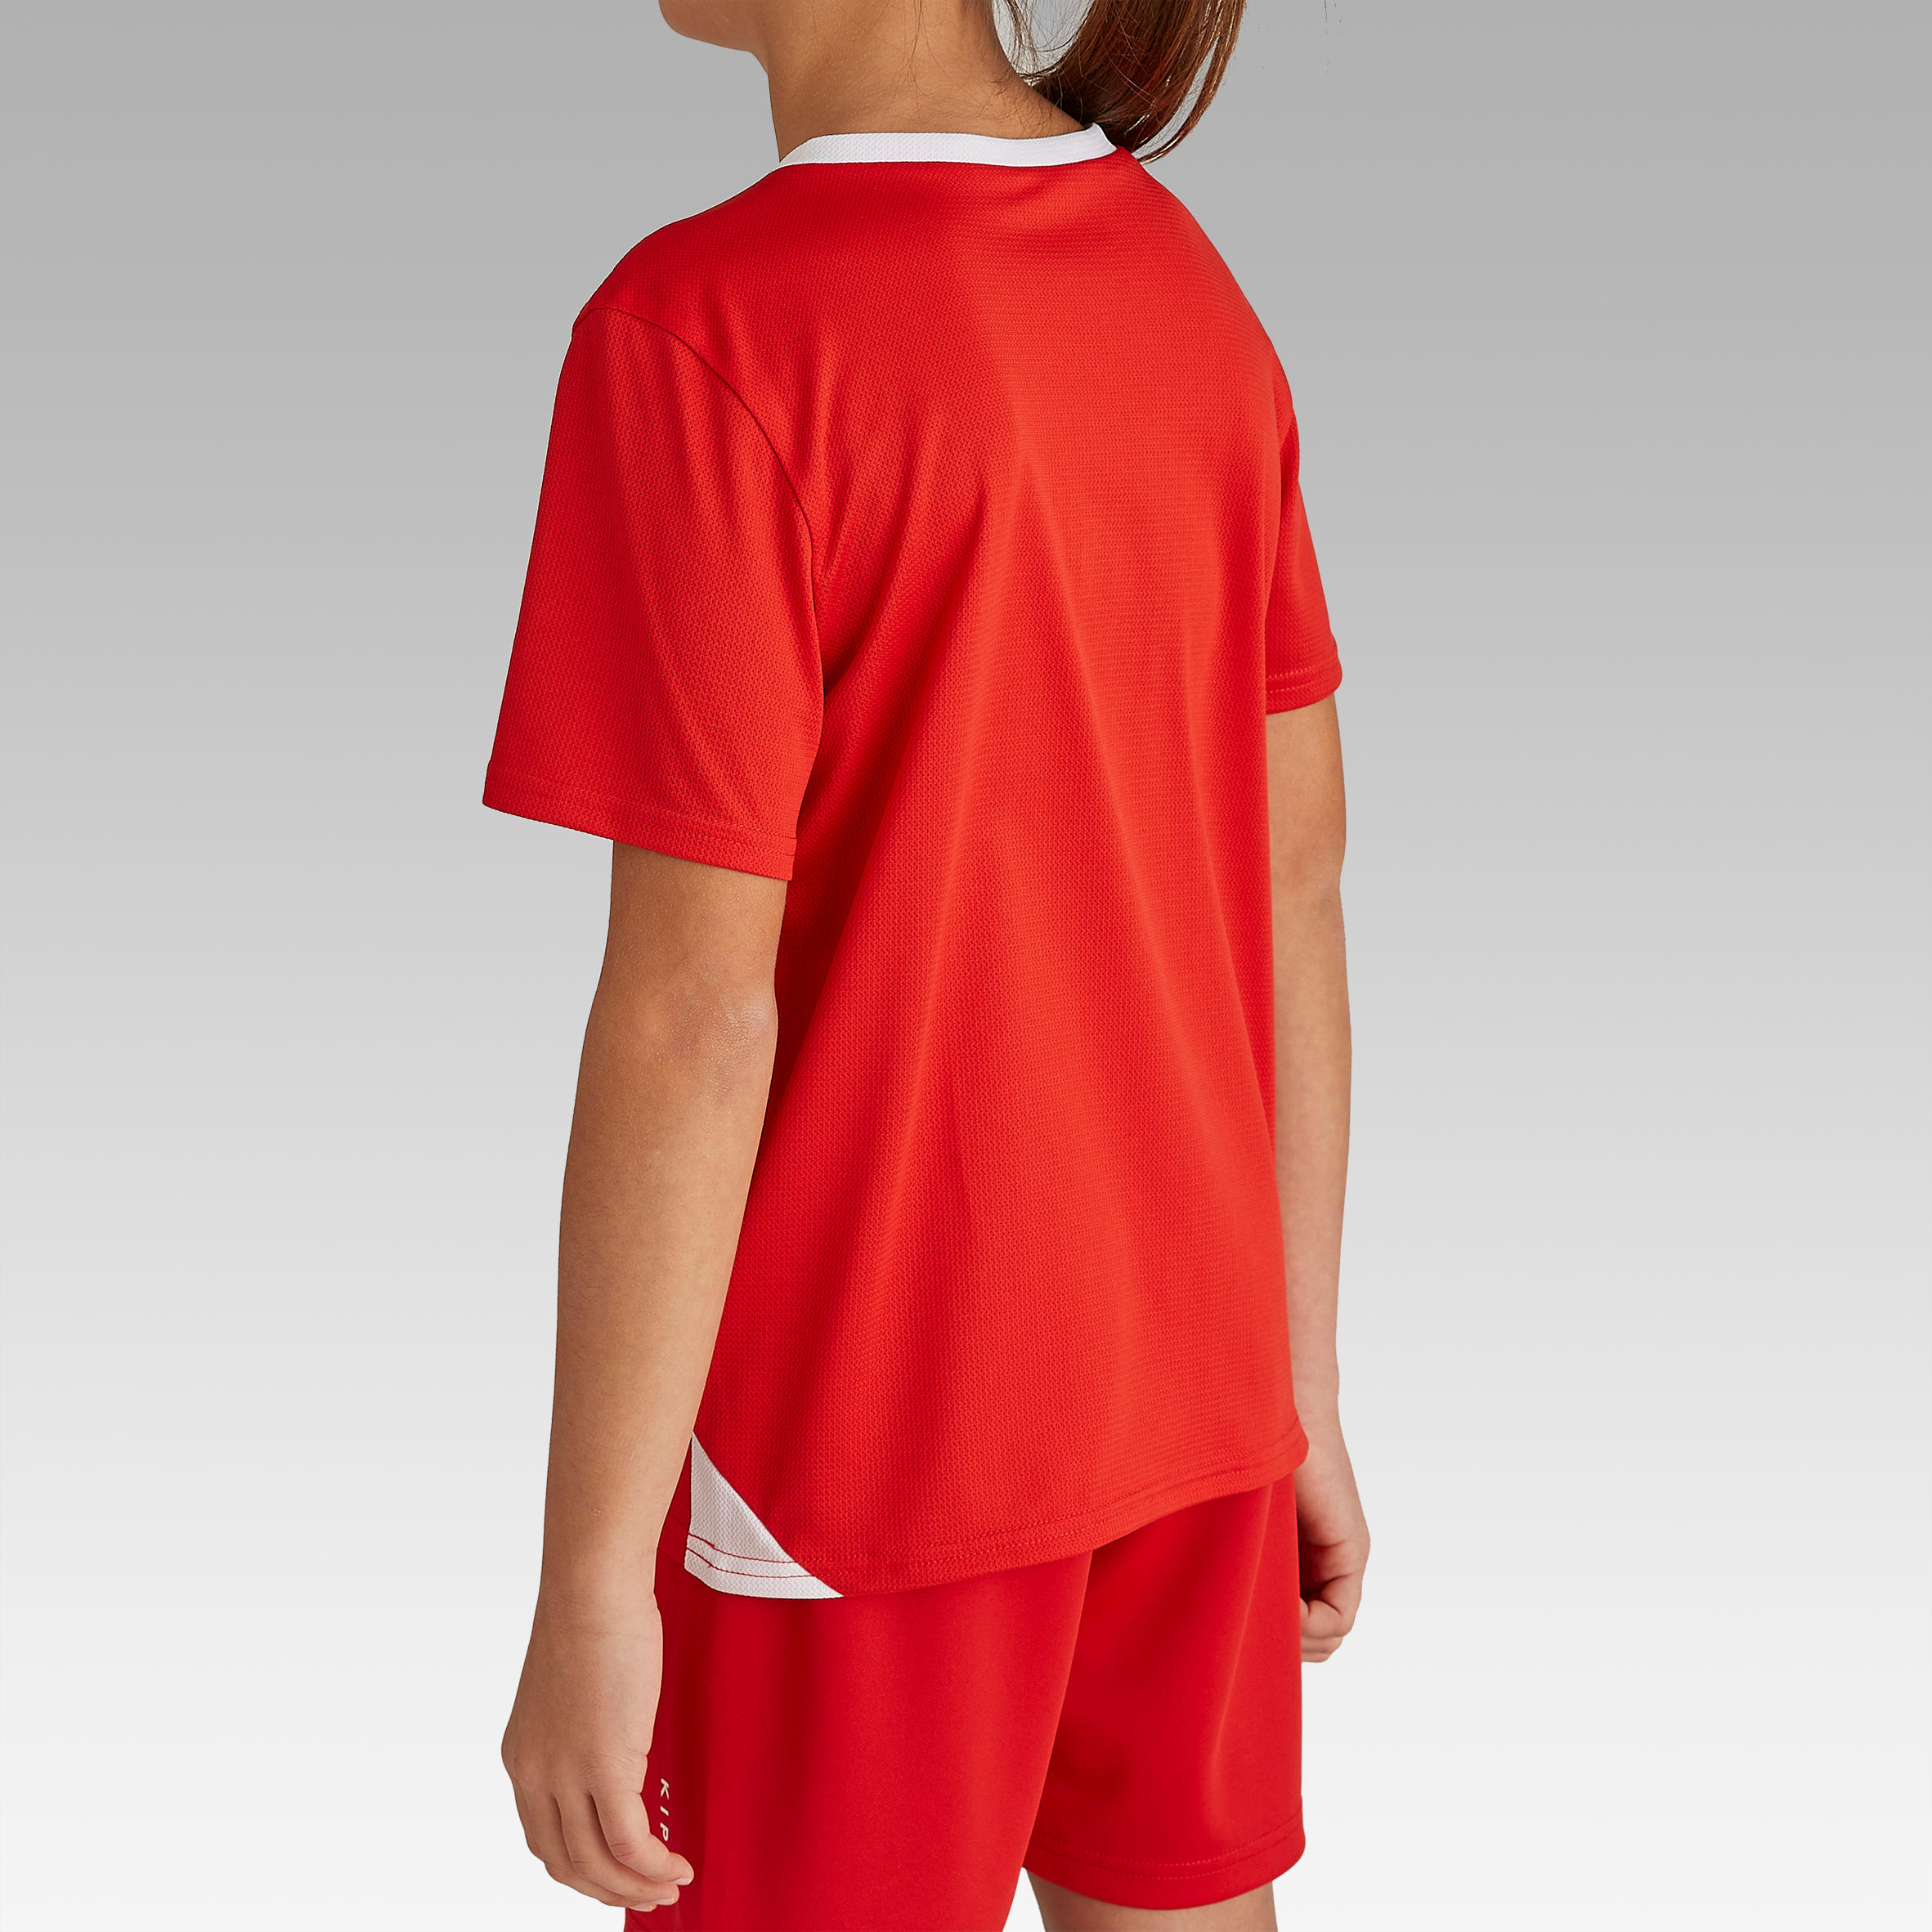 Kids' Football Shirt Essential - Red 5/8